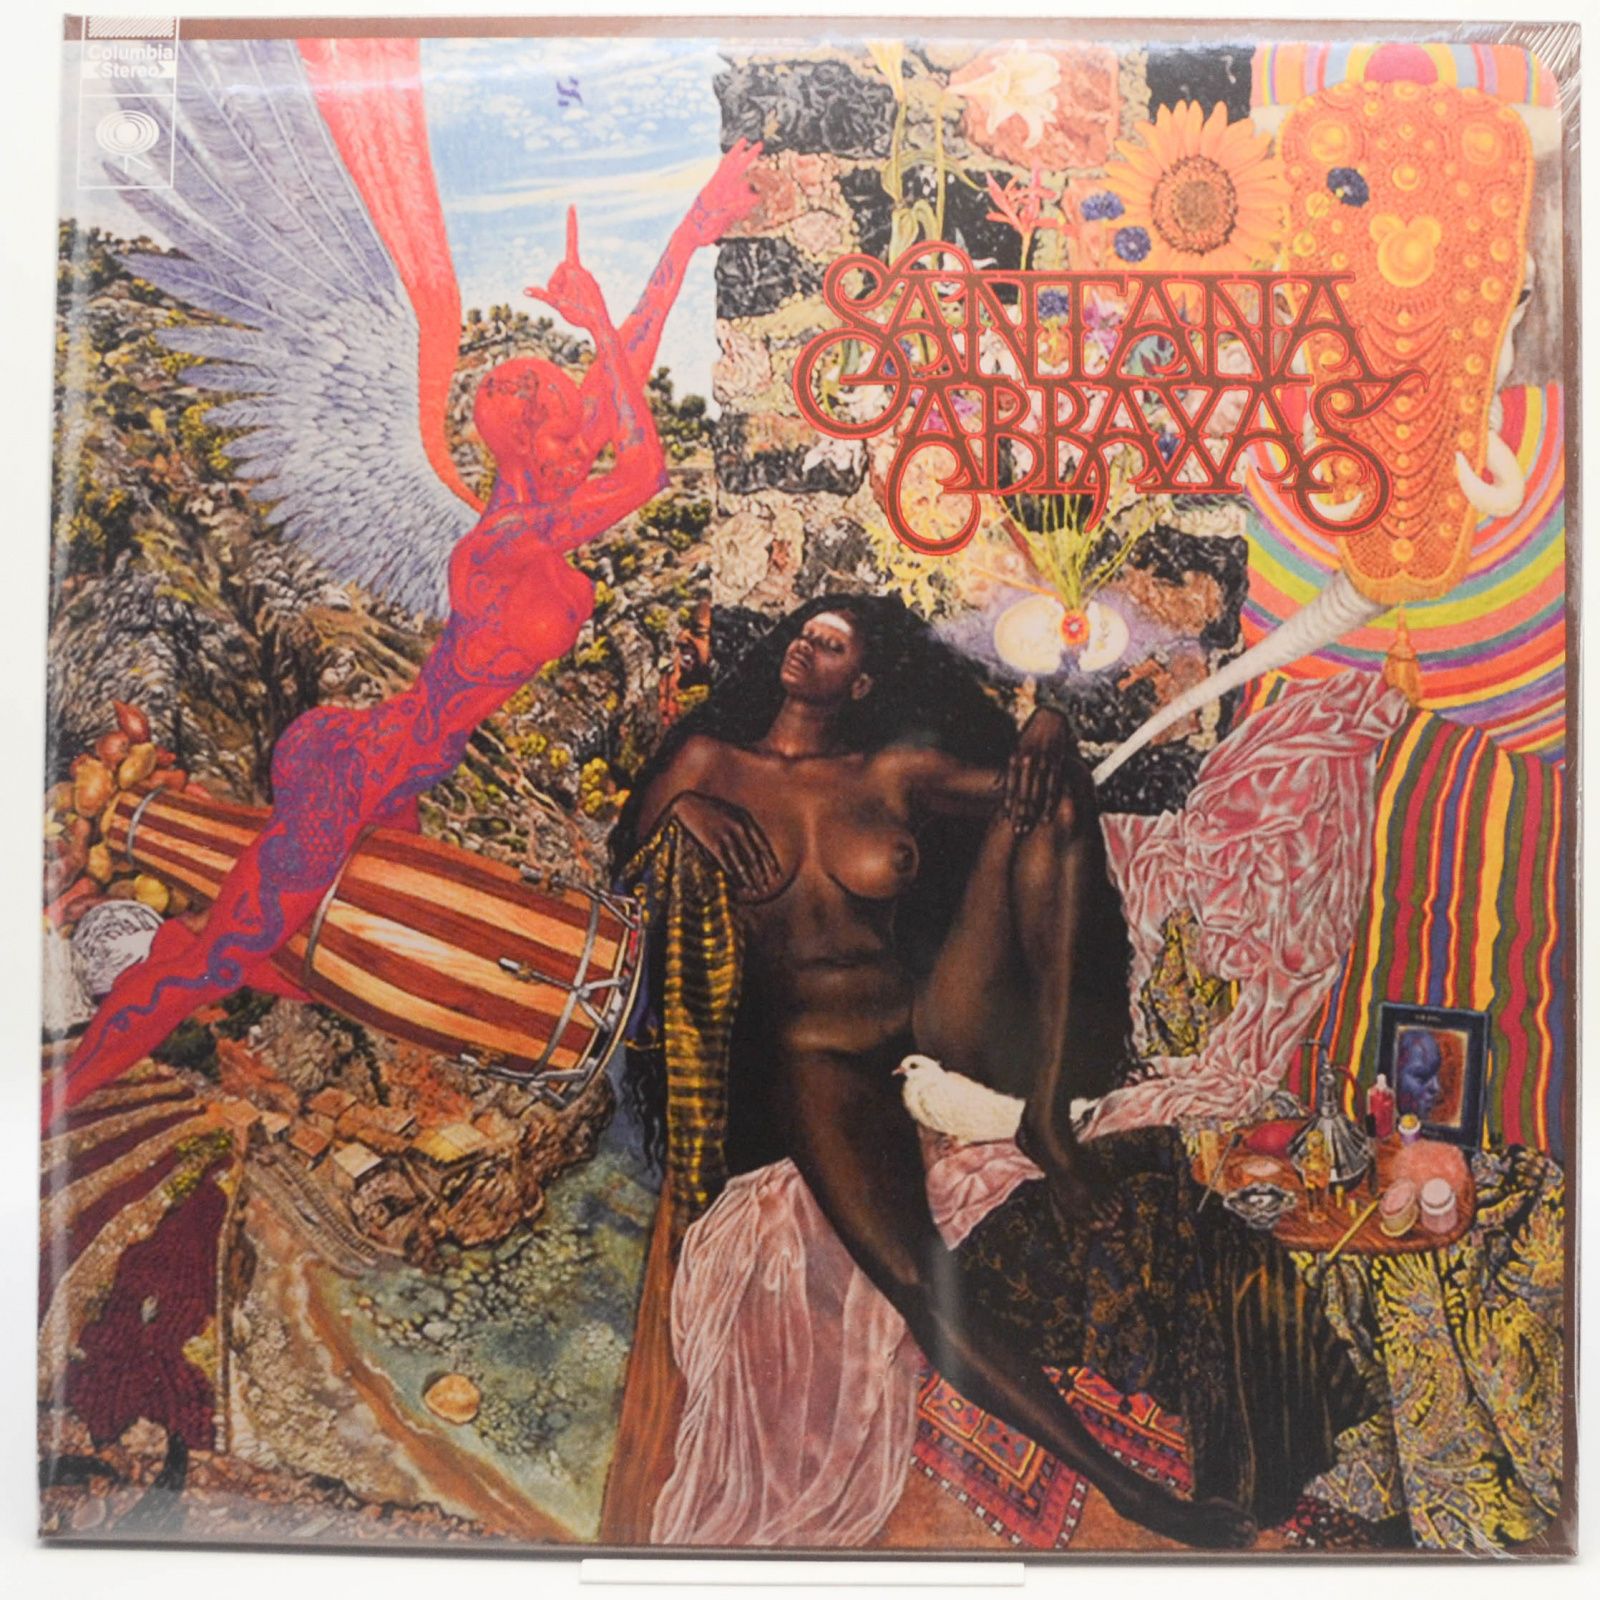 Santana — Abraxas, 2016